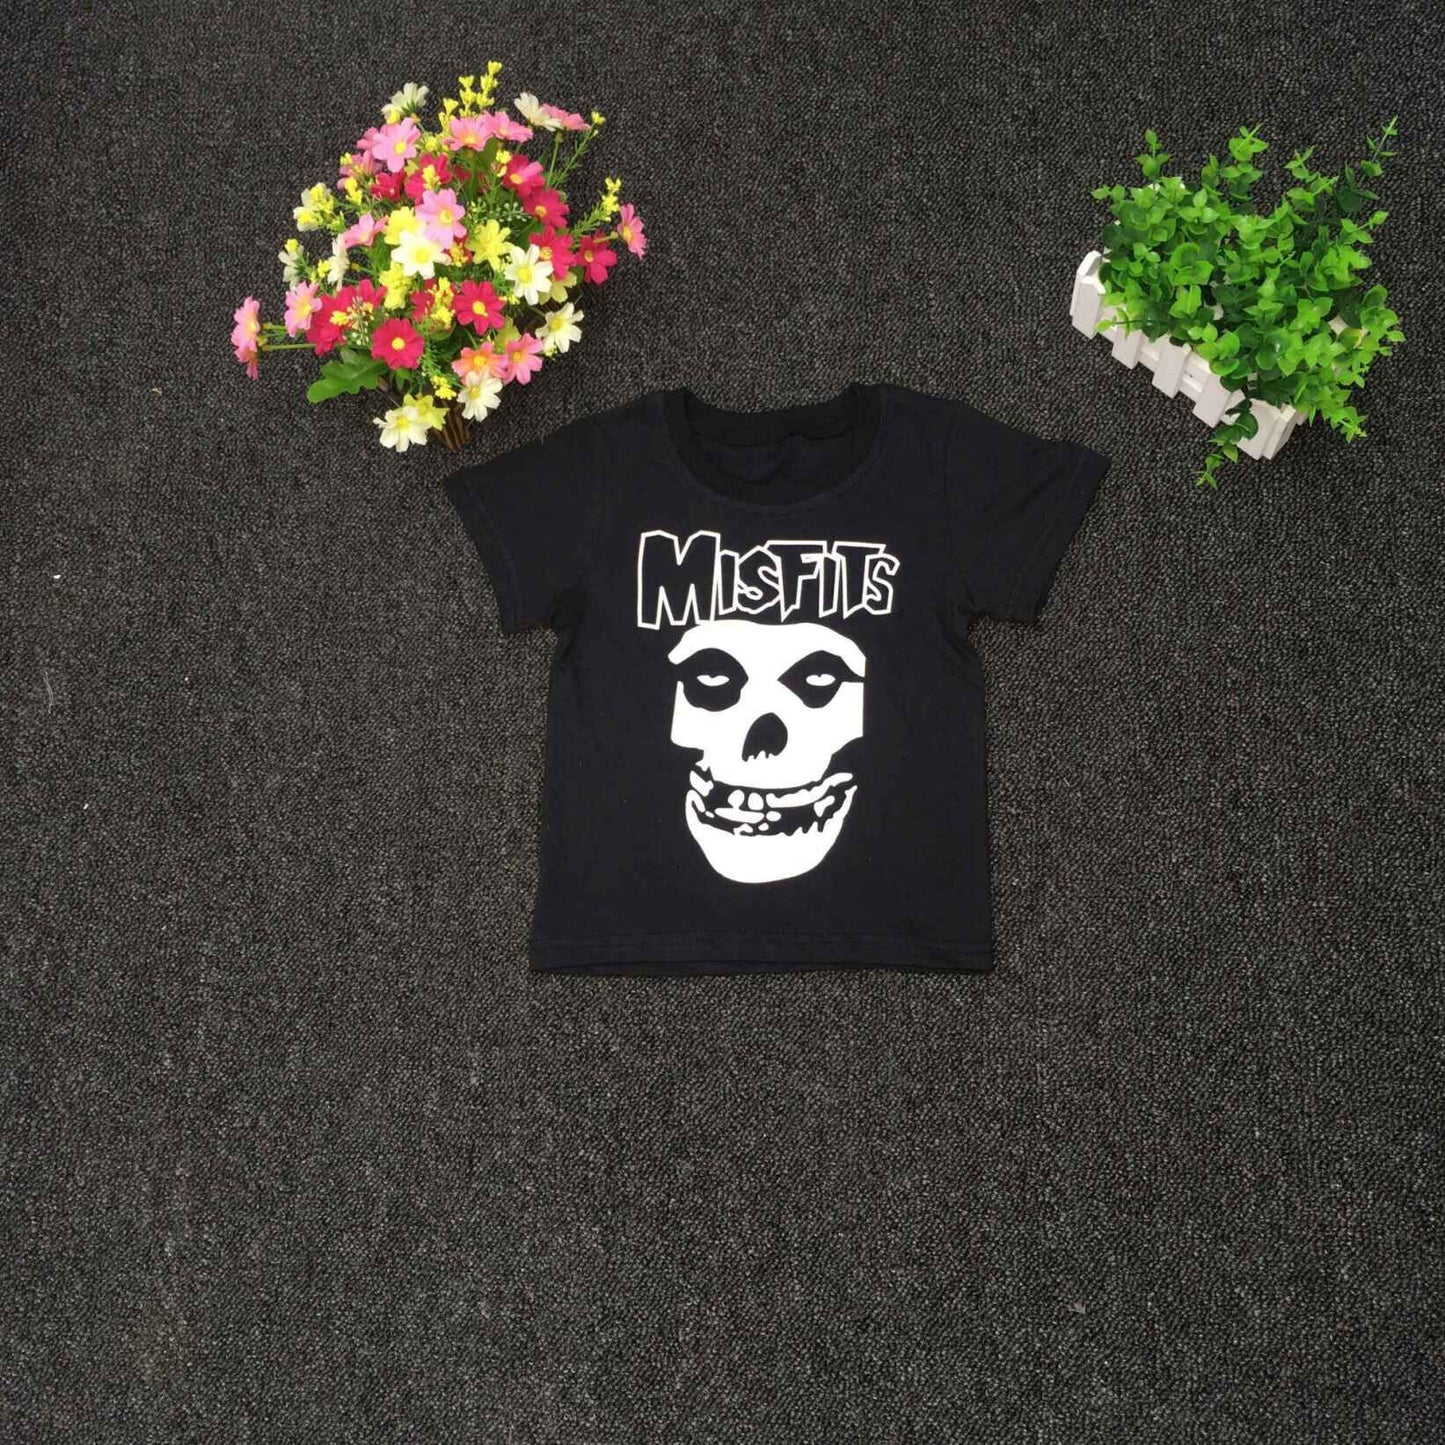 Punk Rock Skull Toddlers Cotton T-Shirt "Misfits"